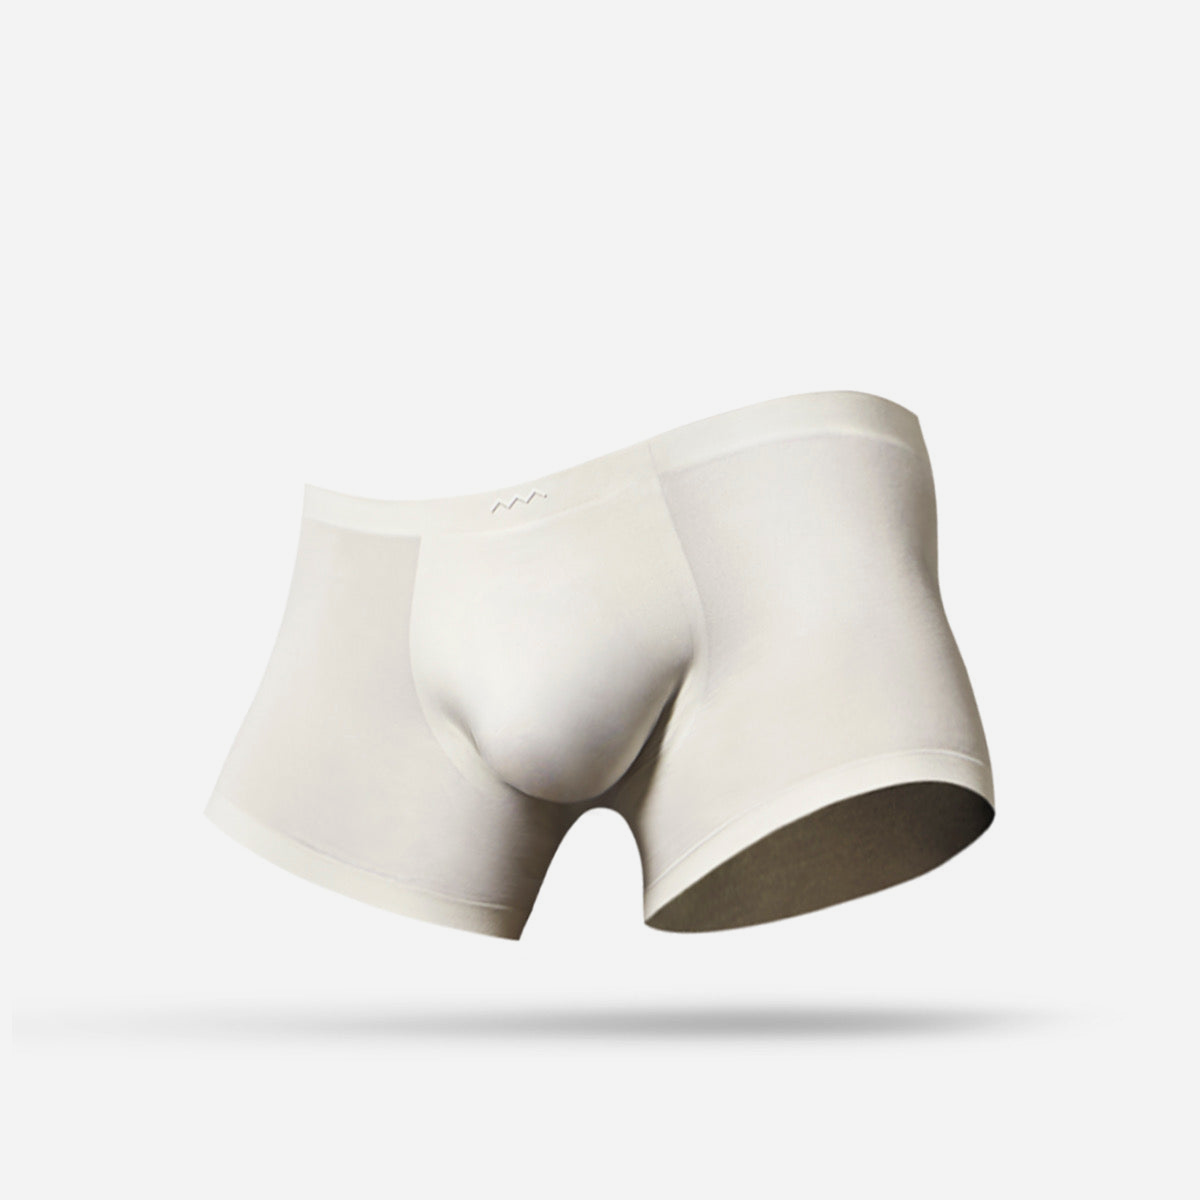 Men's AsWeMove StealthSkin Underwear MULTIPLE SIZE MULTIPLE COLORS FAST  SHIP